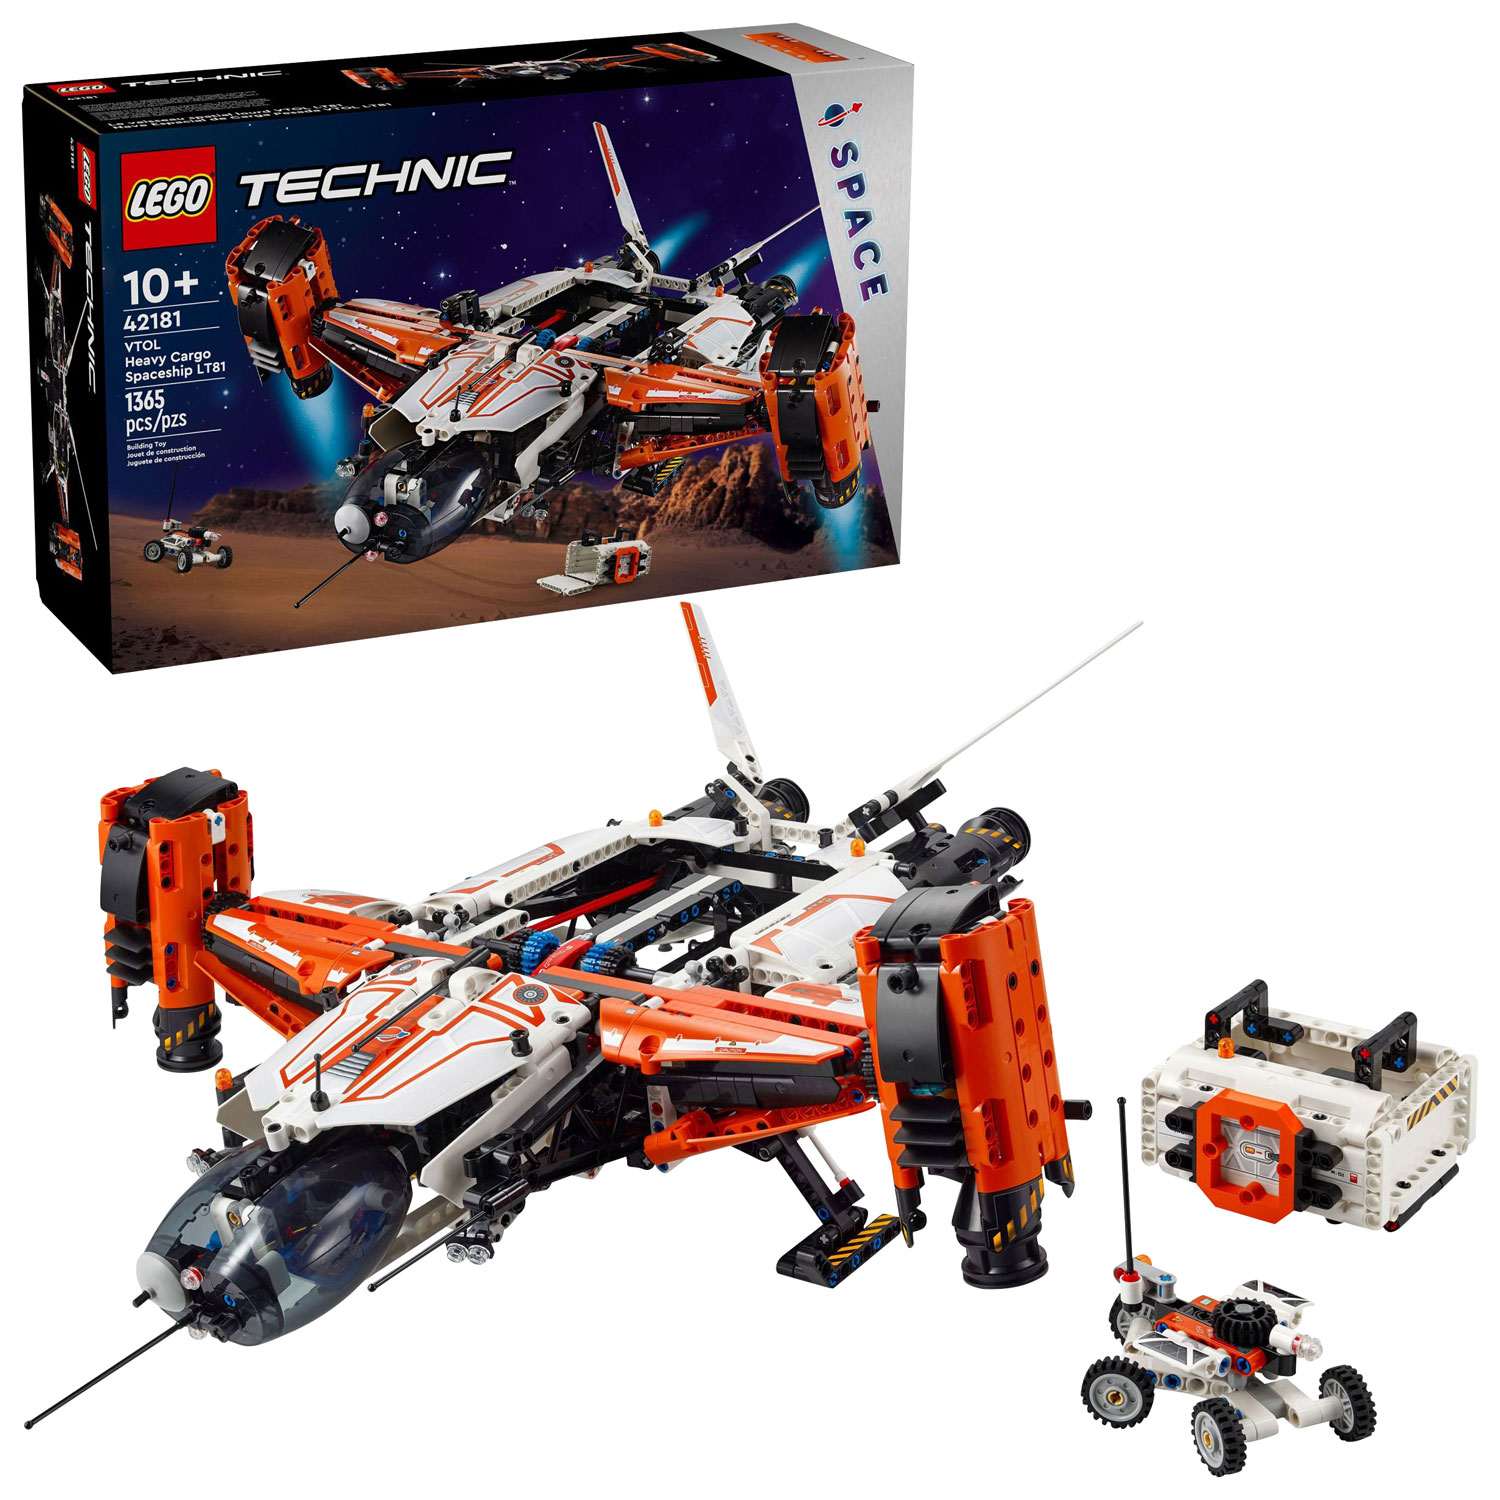 LEGO Technic: VTOL Heavy Cargo Spaceship LT81 - 1365 Pieces (42181)